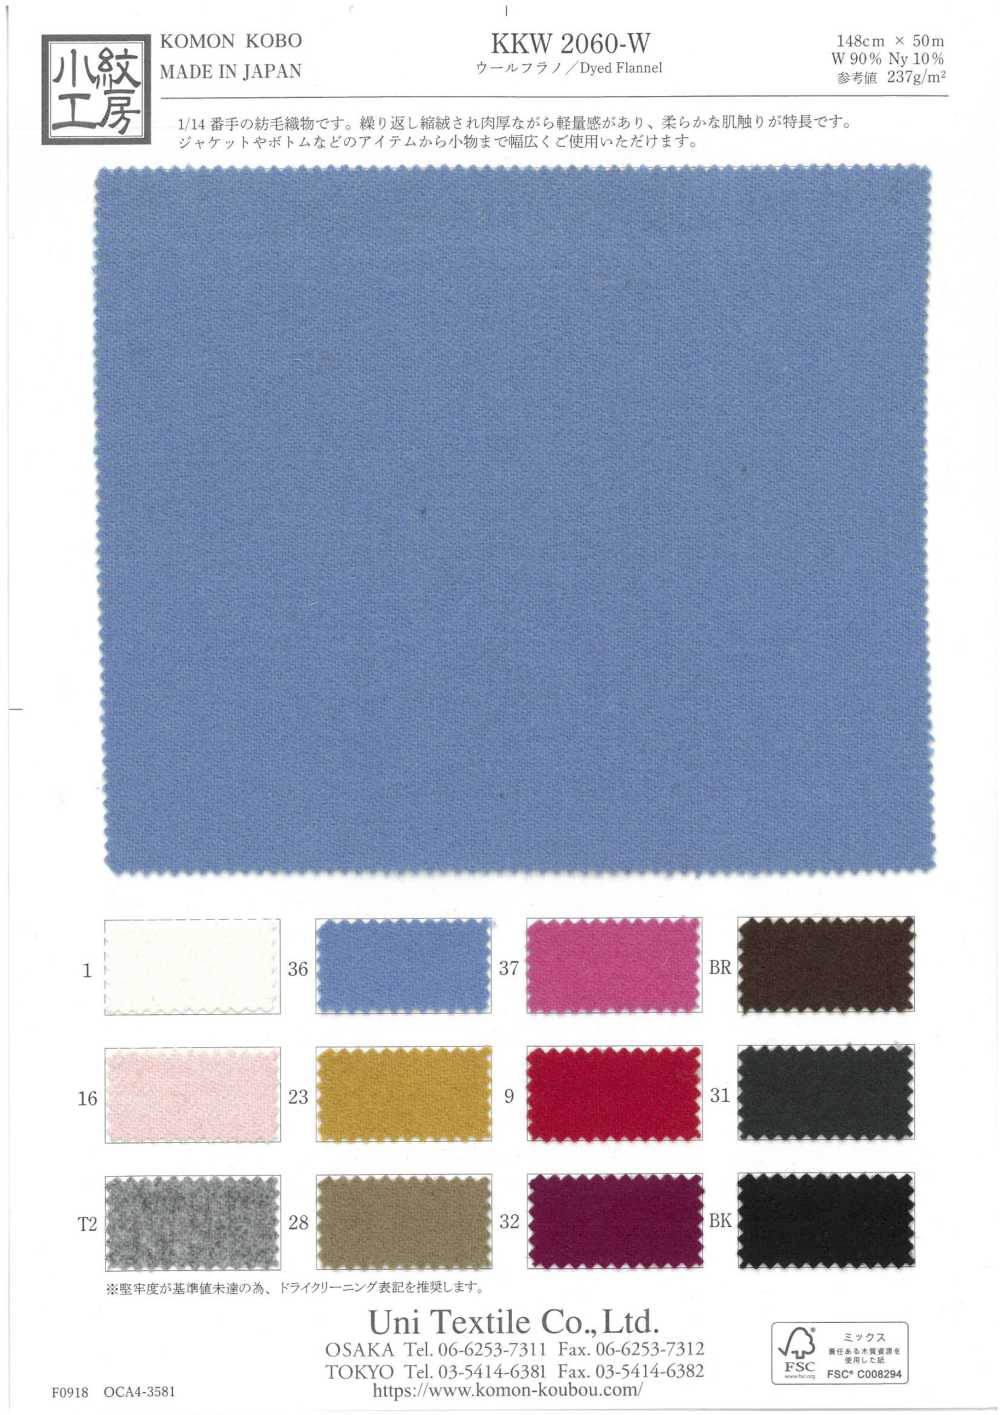 KKW2060-W Wool Flannel[Textile / Fabric] Uni Textile